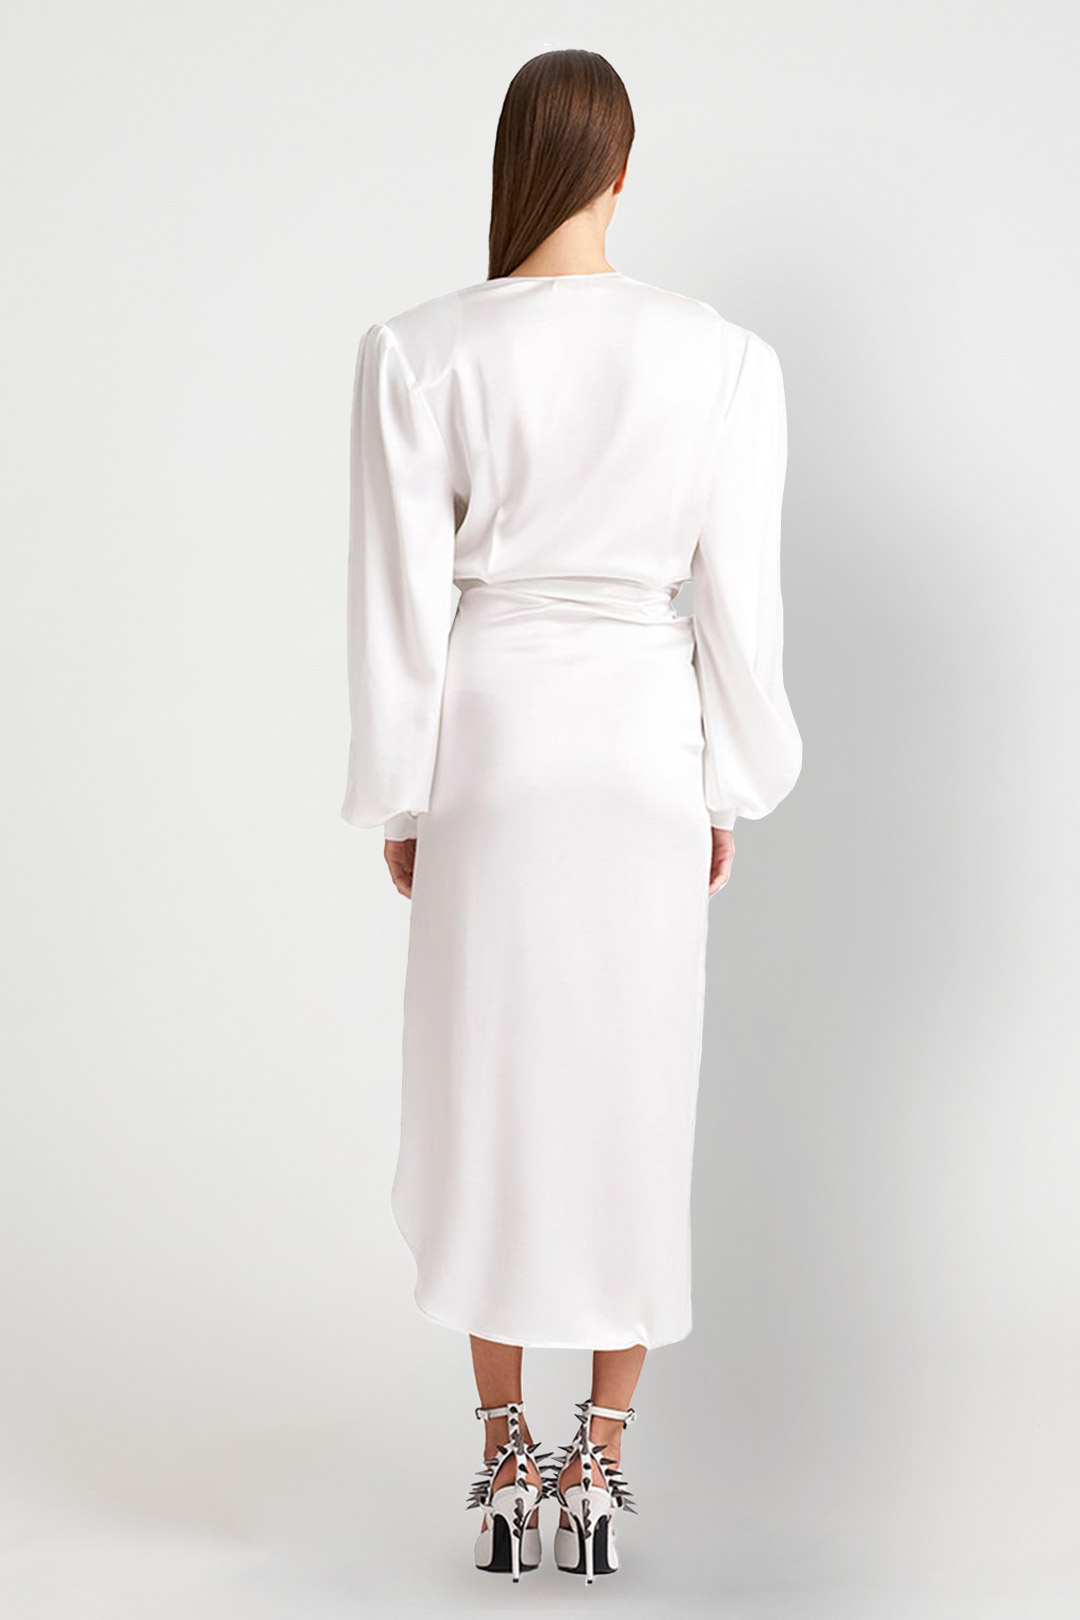 Rent A Dress Nina White Dress - Ronny Kobo Dress Rental